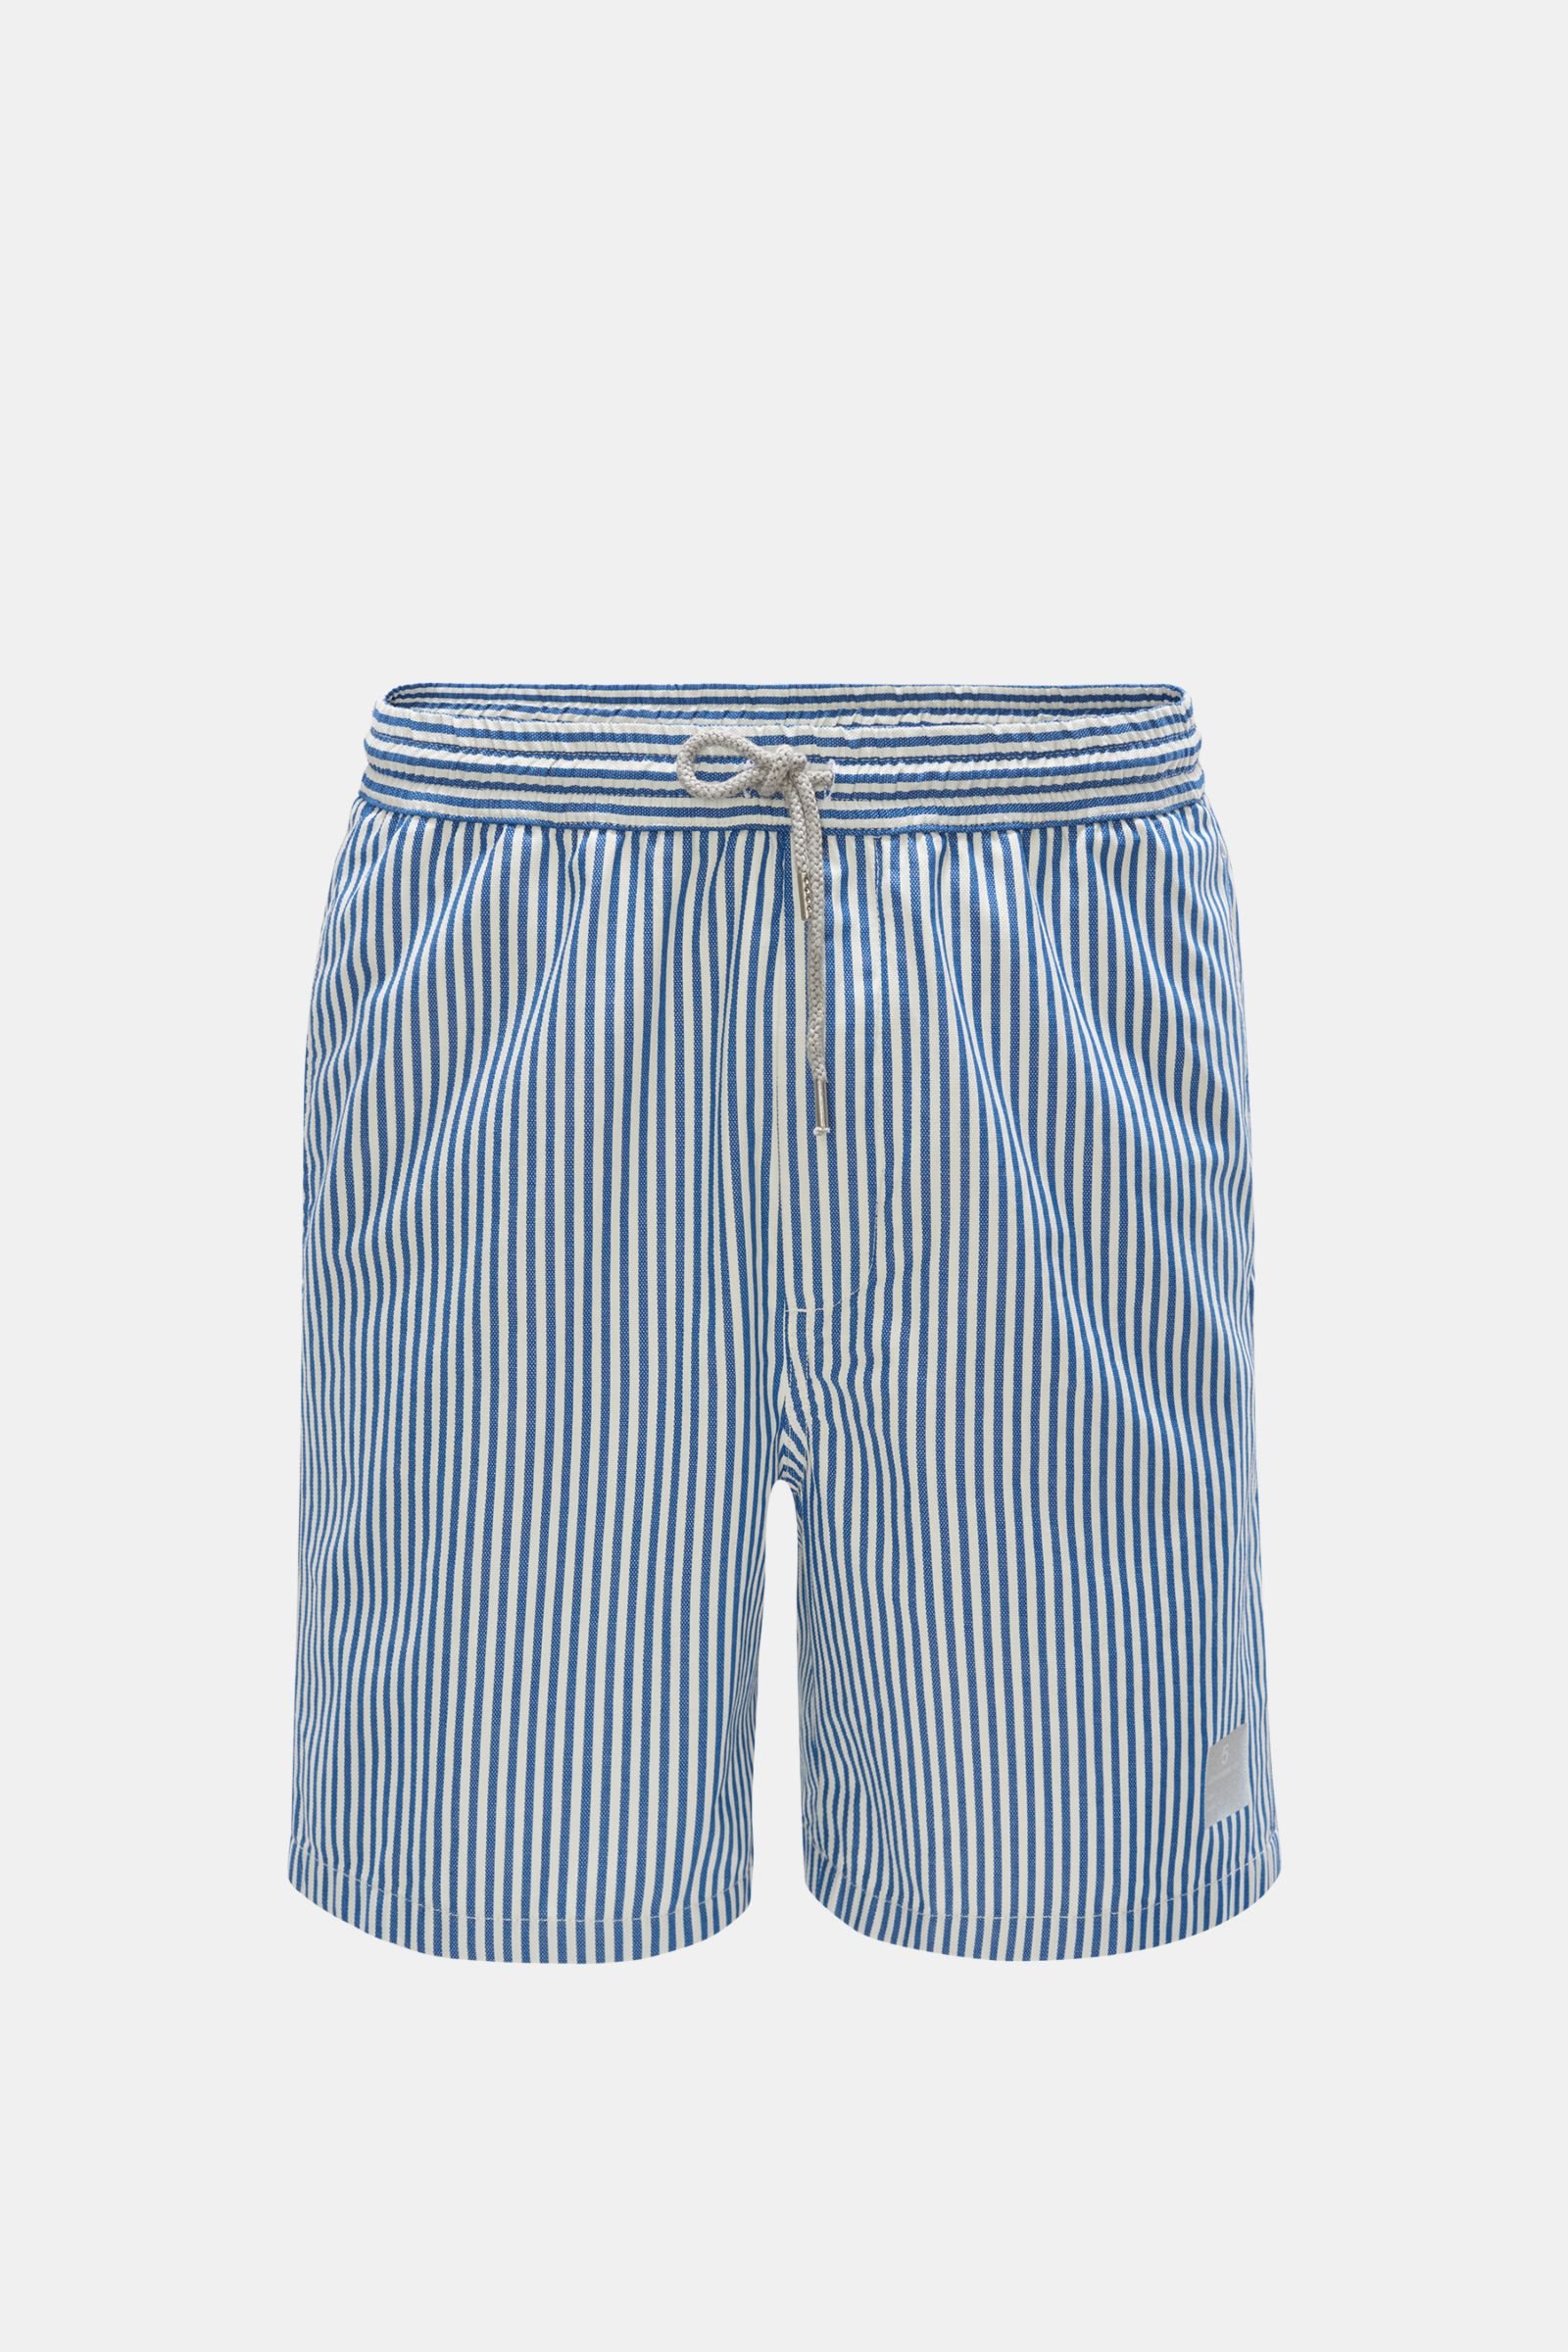 Shorts dark blue/white striped